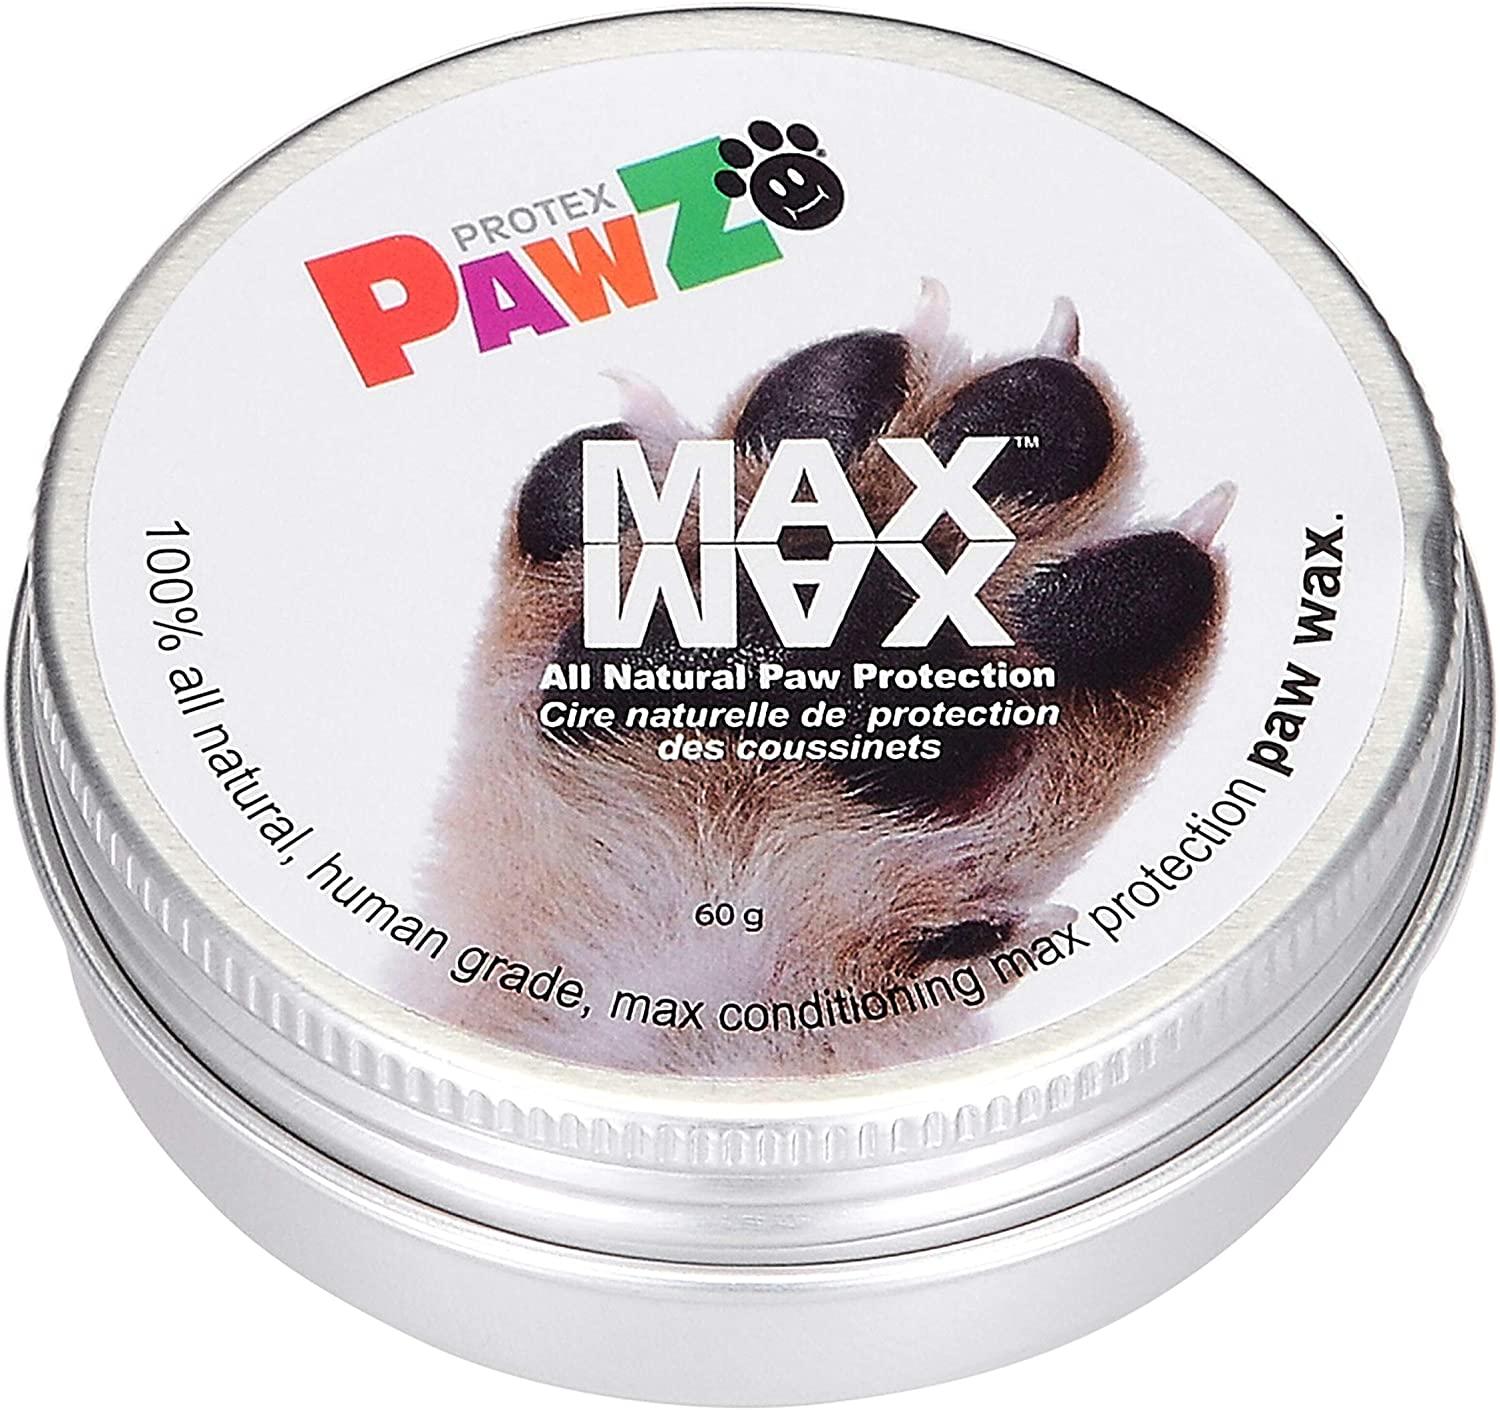 Pawz Max Wax Paw Protection 60g